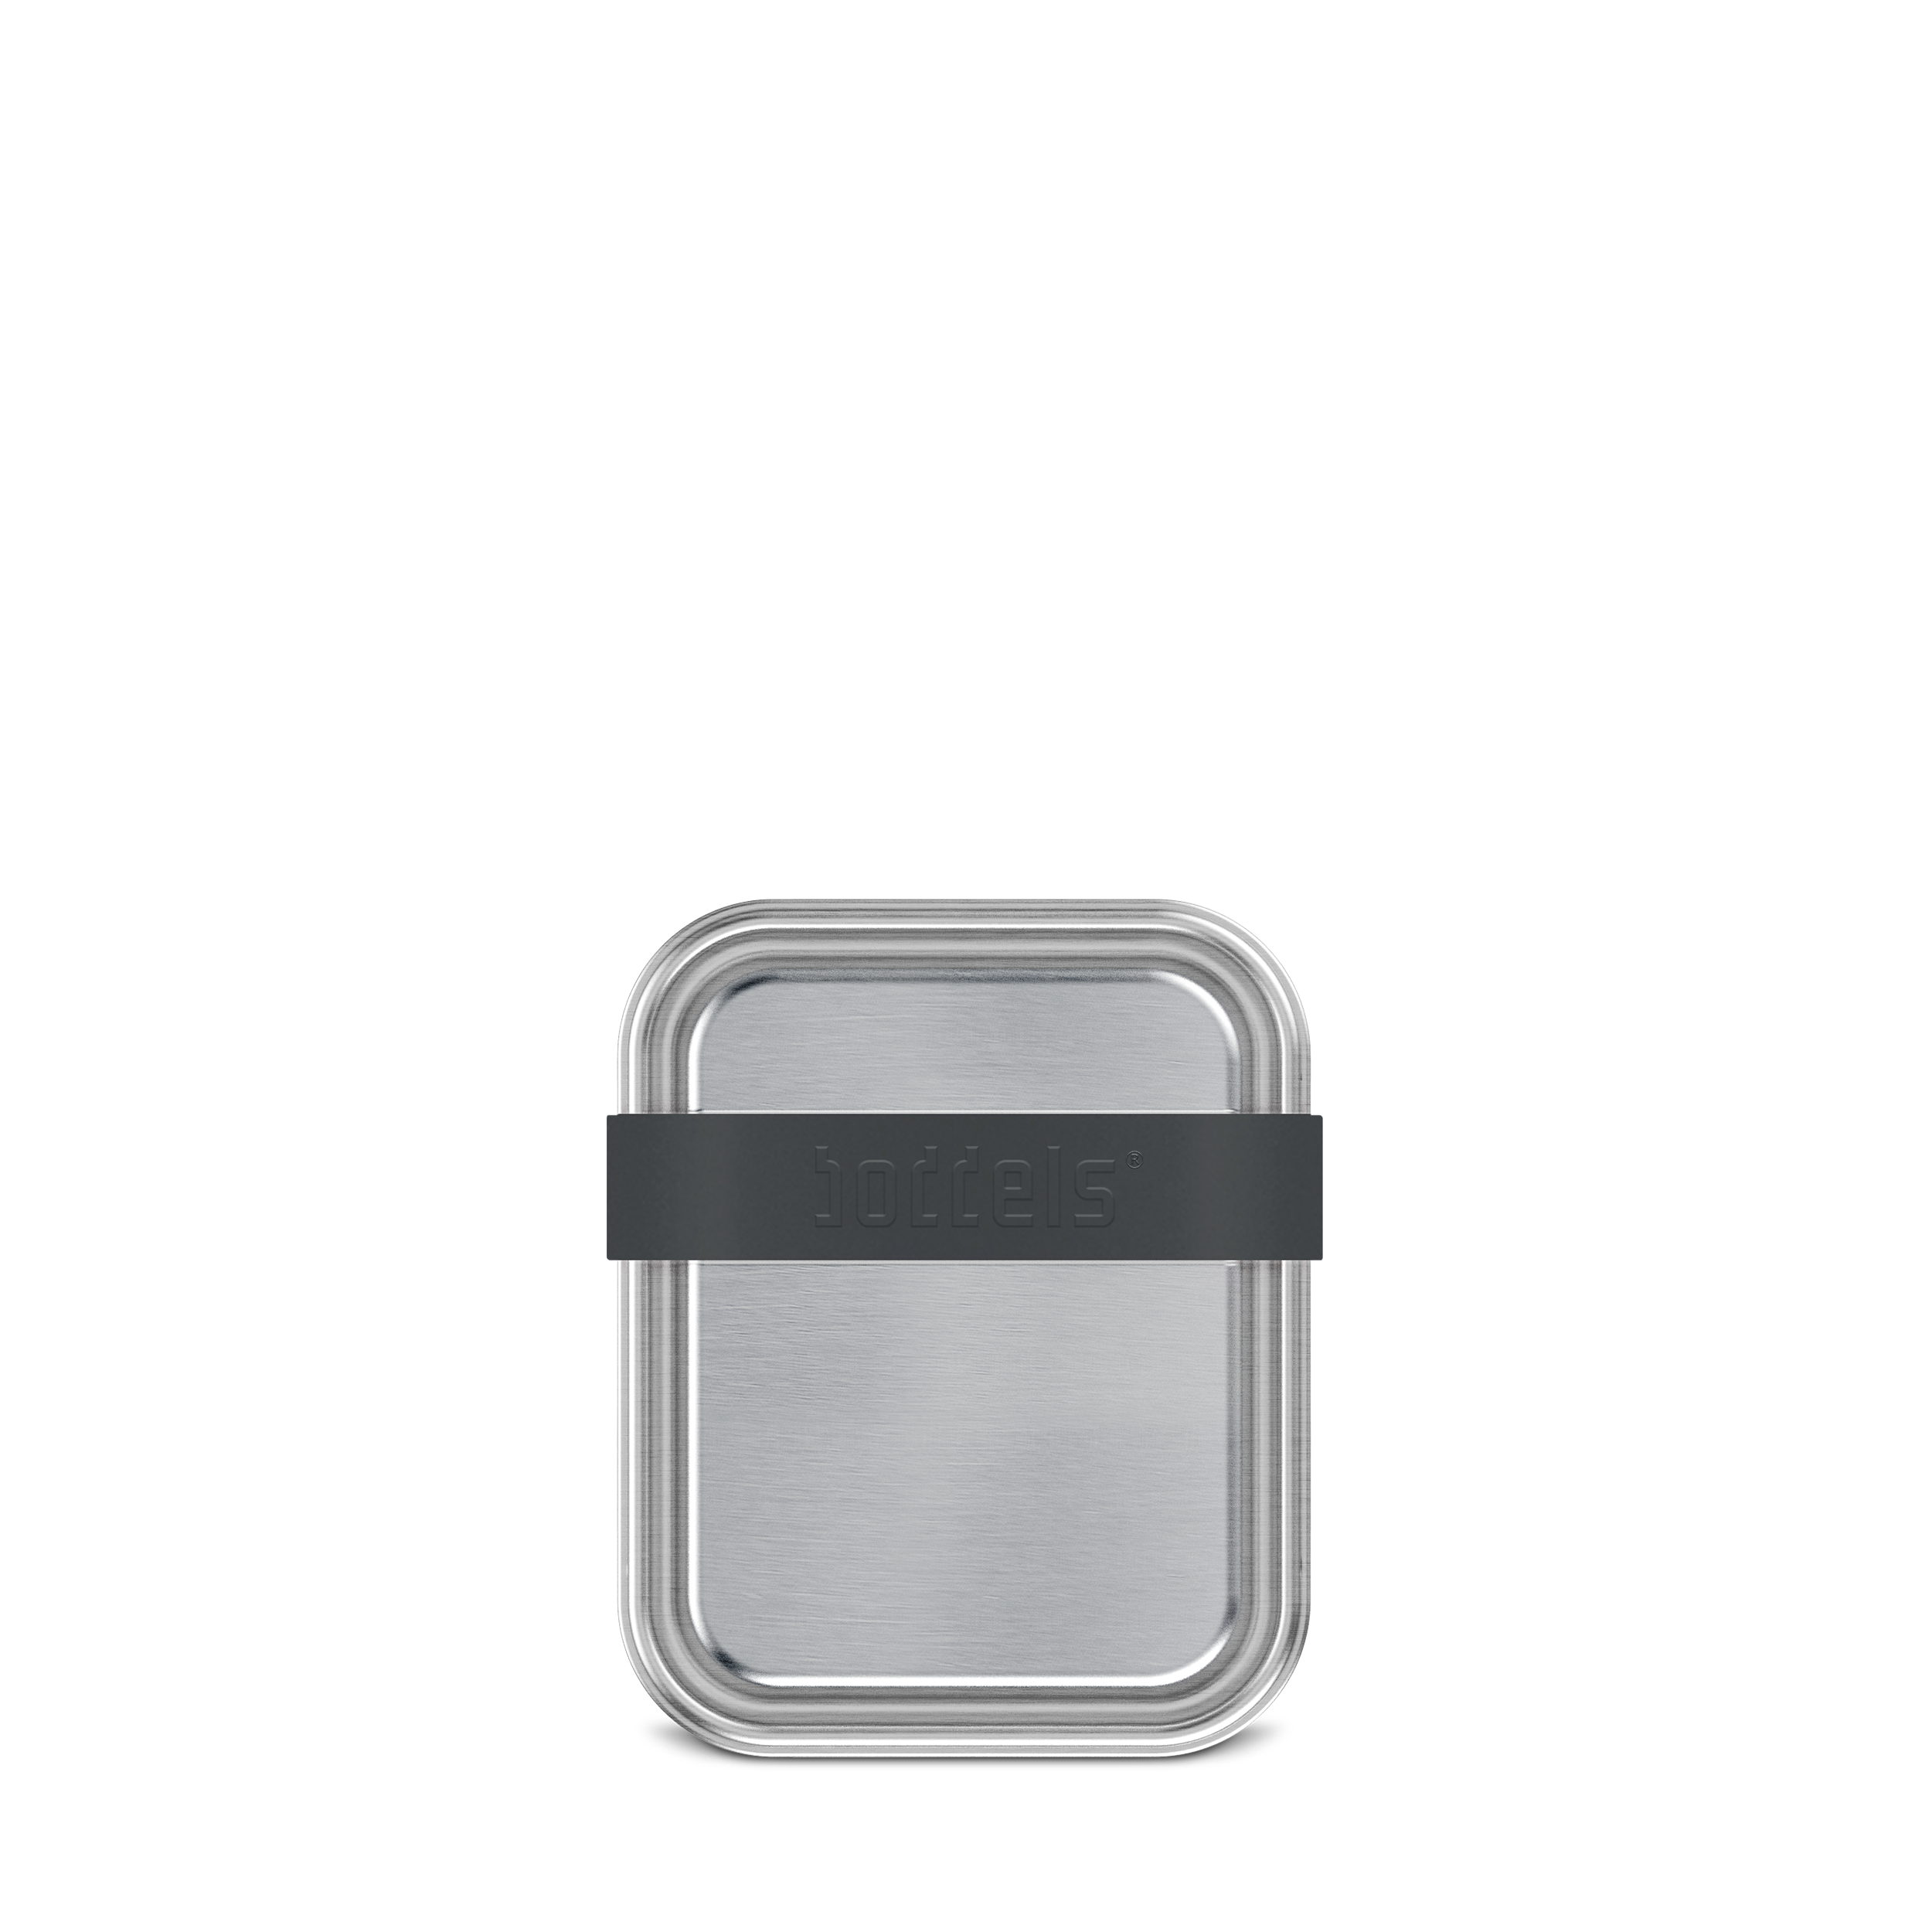 PRADA Logo Stainless Steel Lunch Box